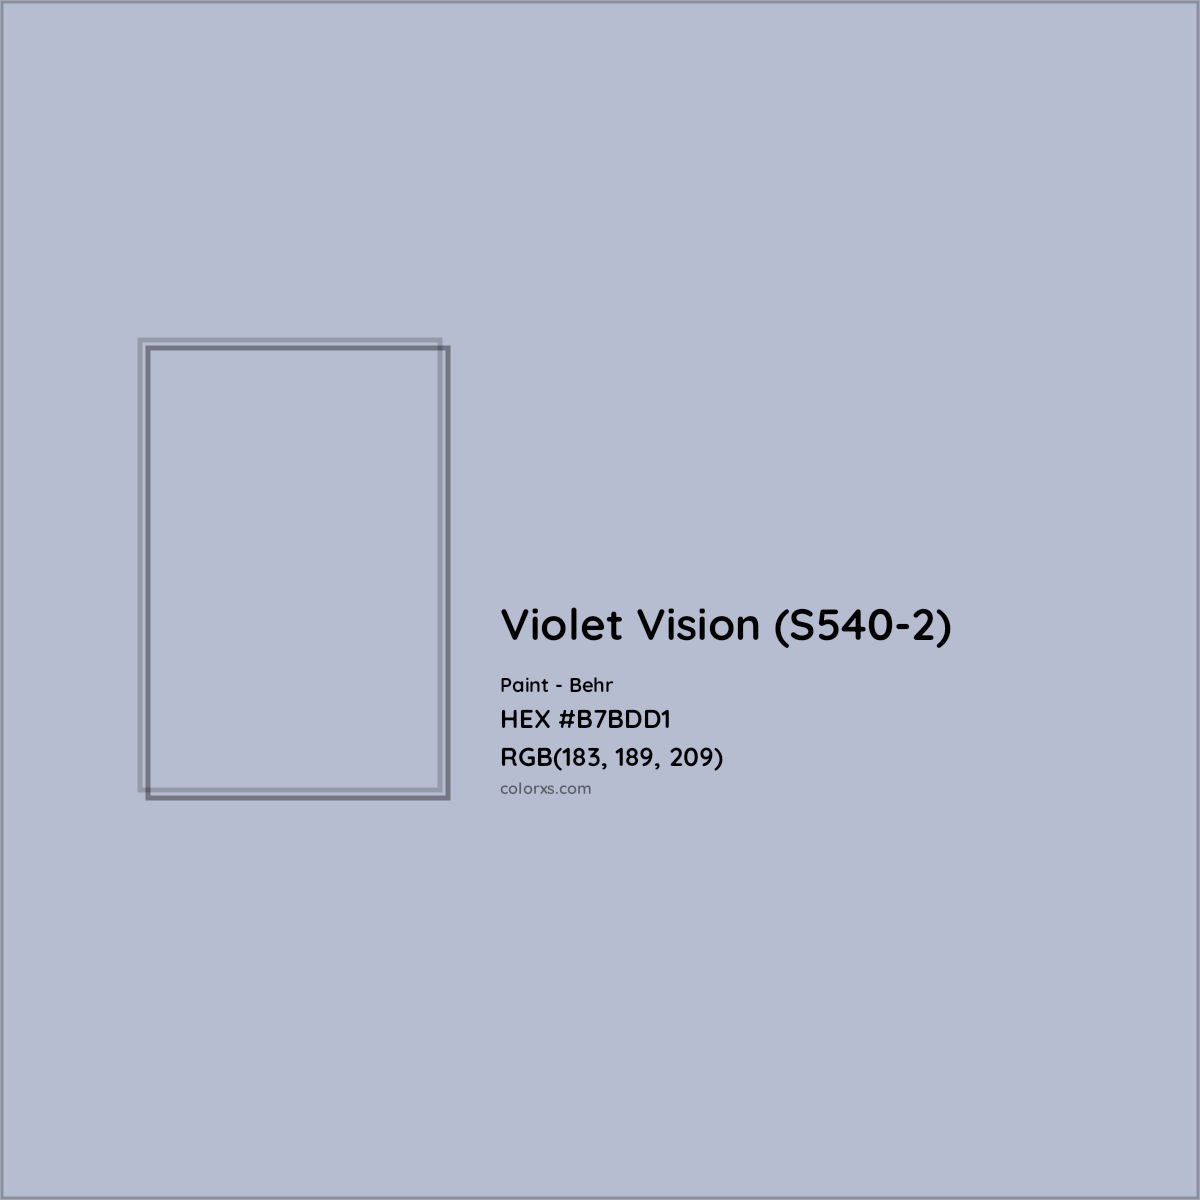 HEX #B7BDD1 Violet Vision (S540-2) Paint Behr - Color Code